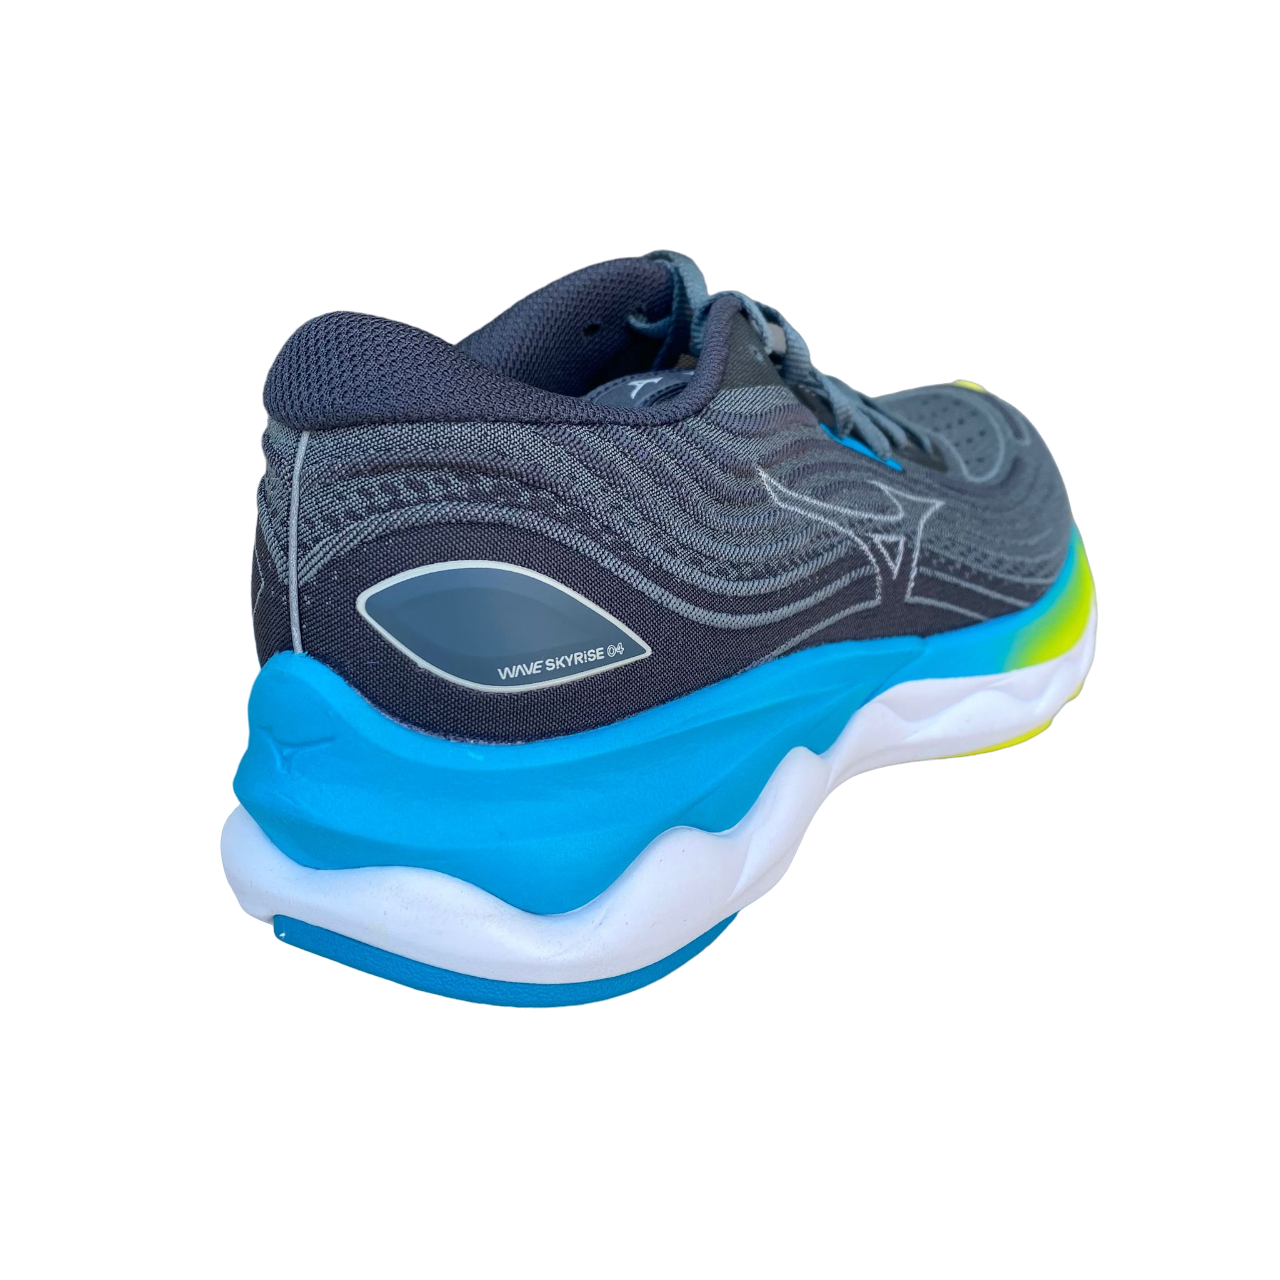 Mizuno scarpa da corsa da uomo ultra morbida Wave Skyrise 4 grigioblu- blu perla